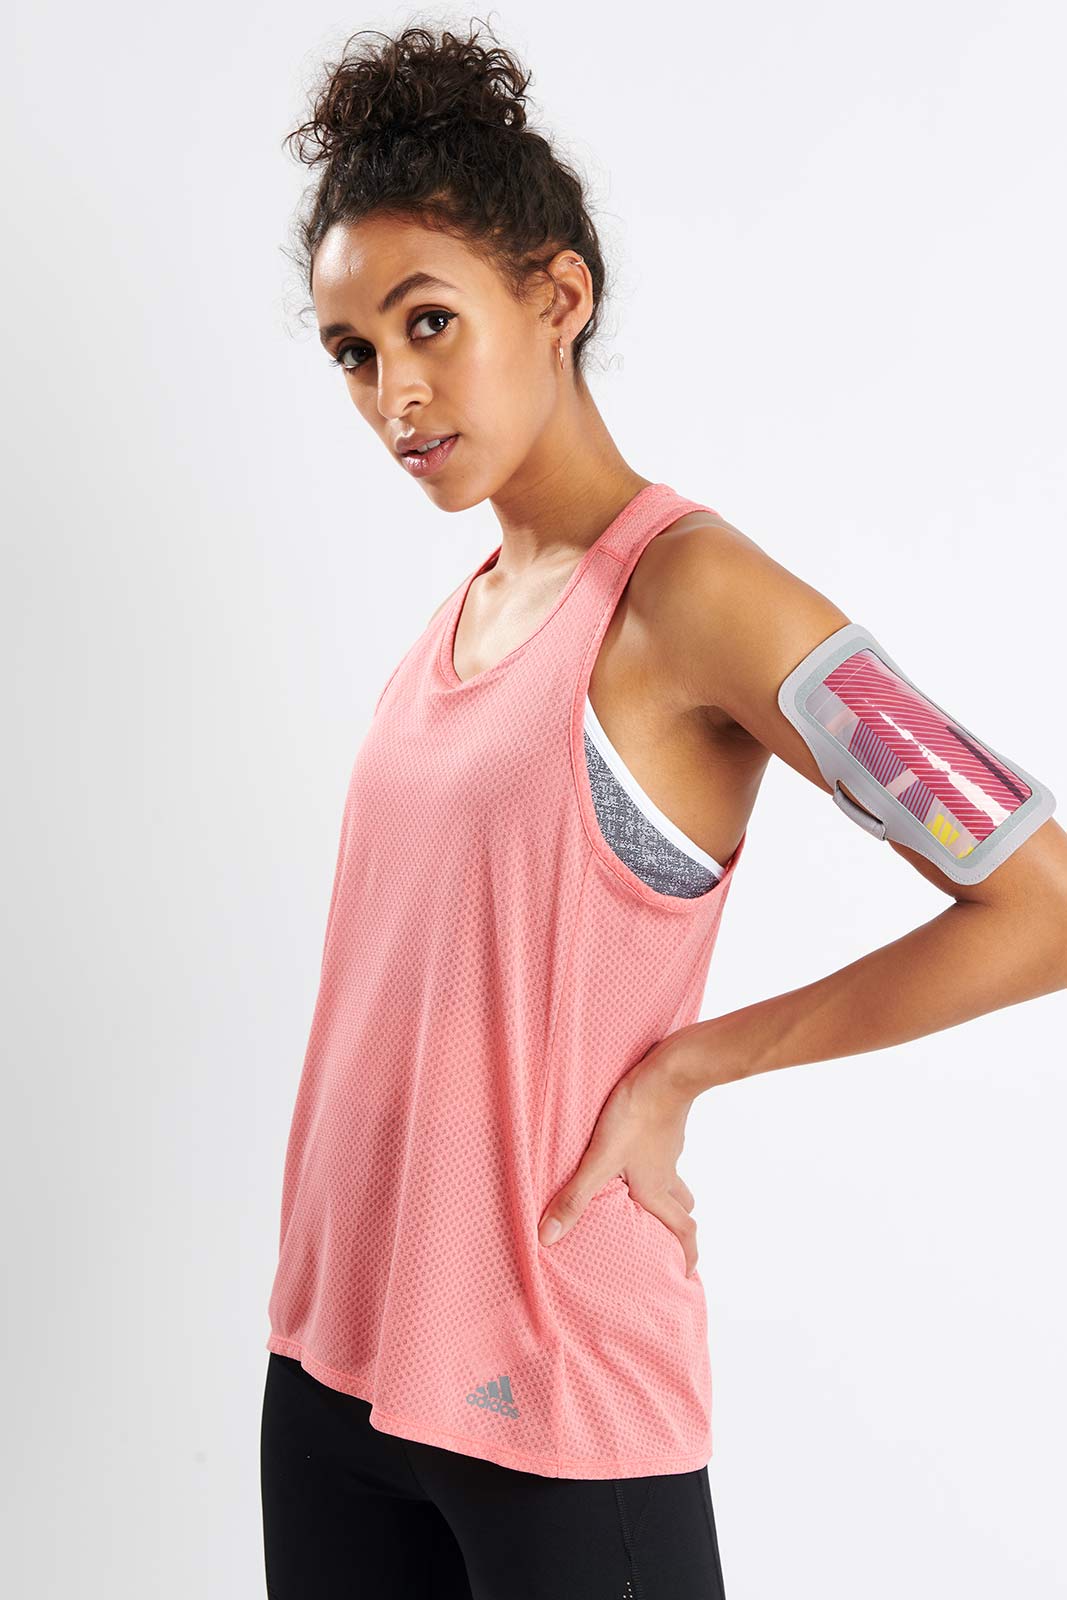 Adidas Originals Response Light Speed Top In Pink | ModeSens